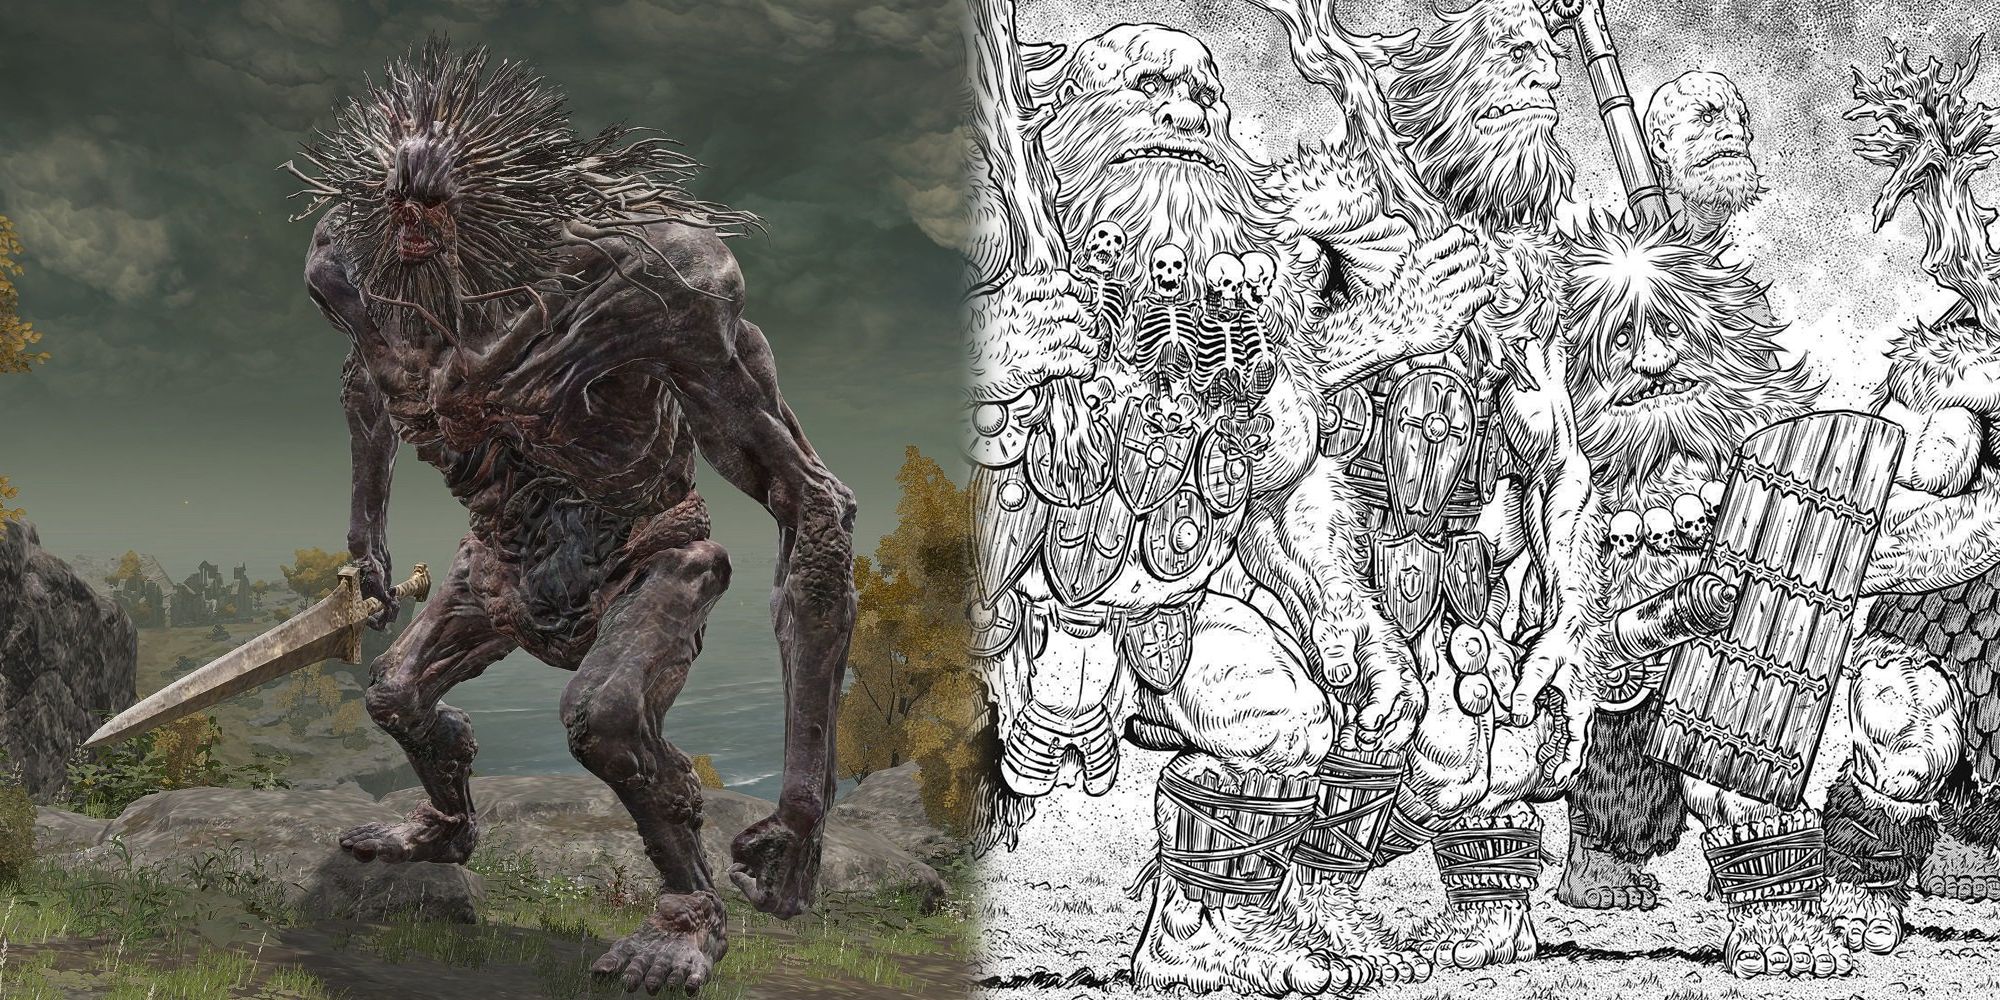 Elden Ring Example of Troll and Example of Berserk Jotunn Giants